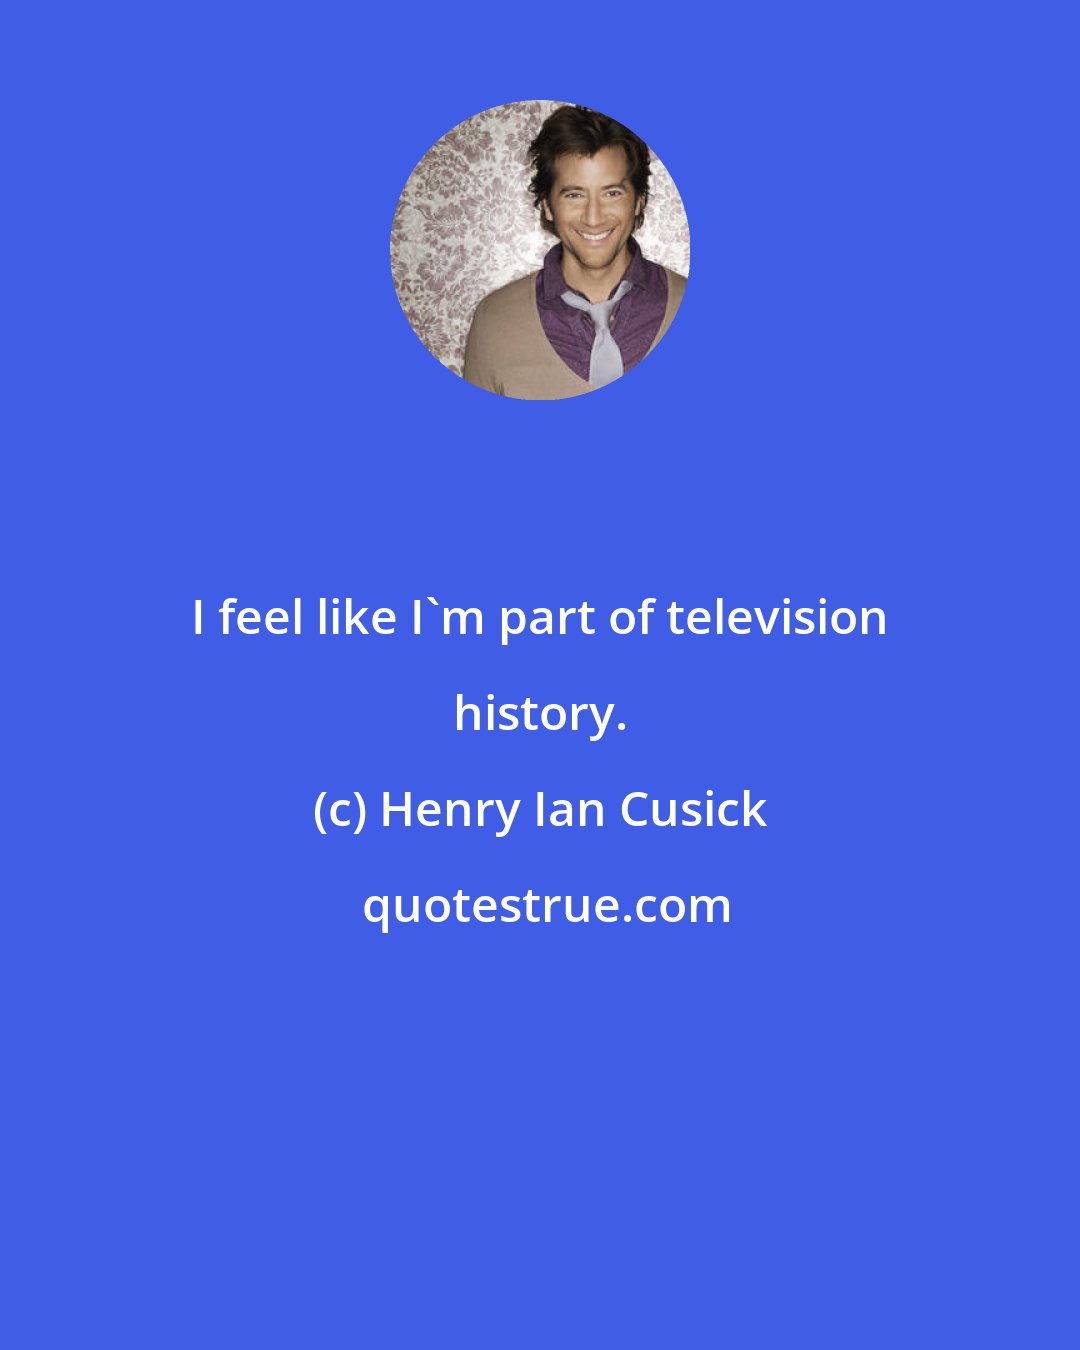 Henry Ian Cusick: I feel like I'm part of television history.